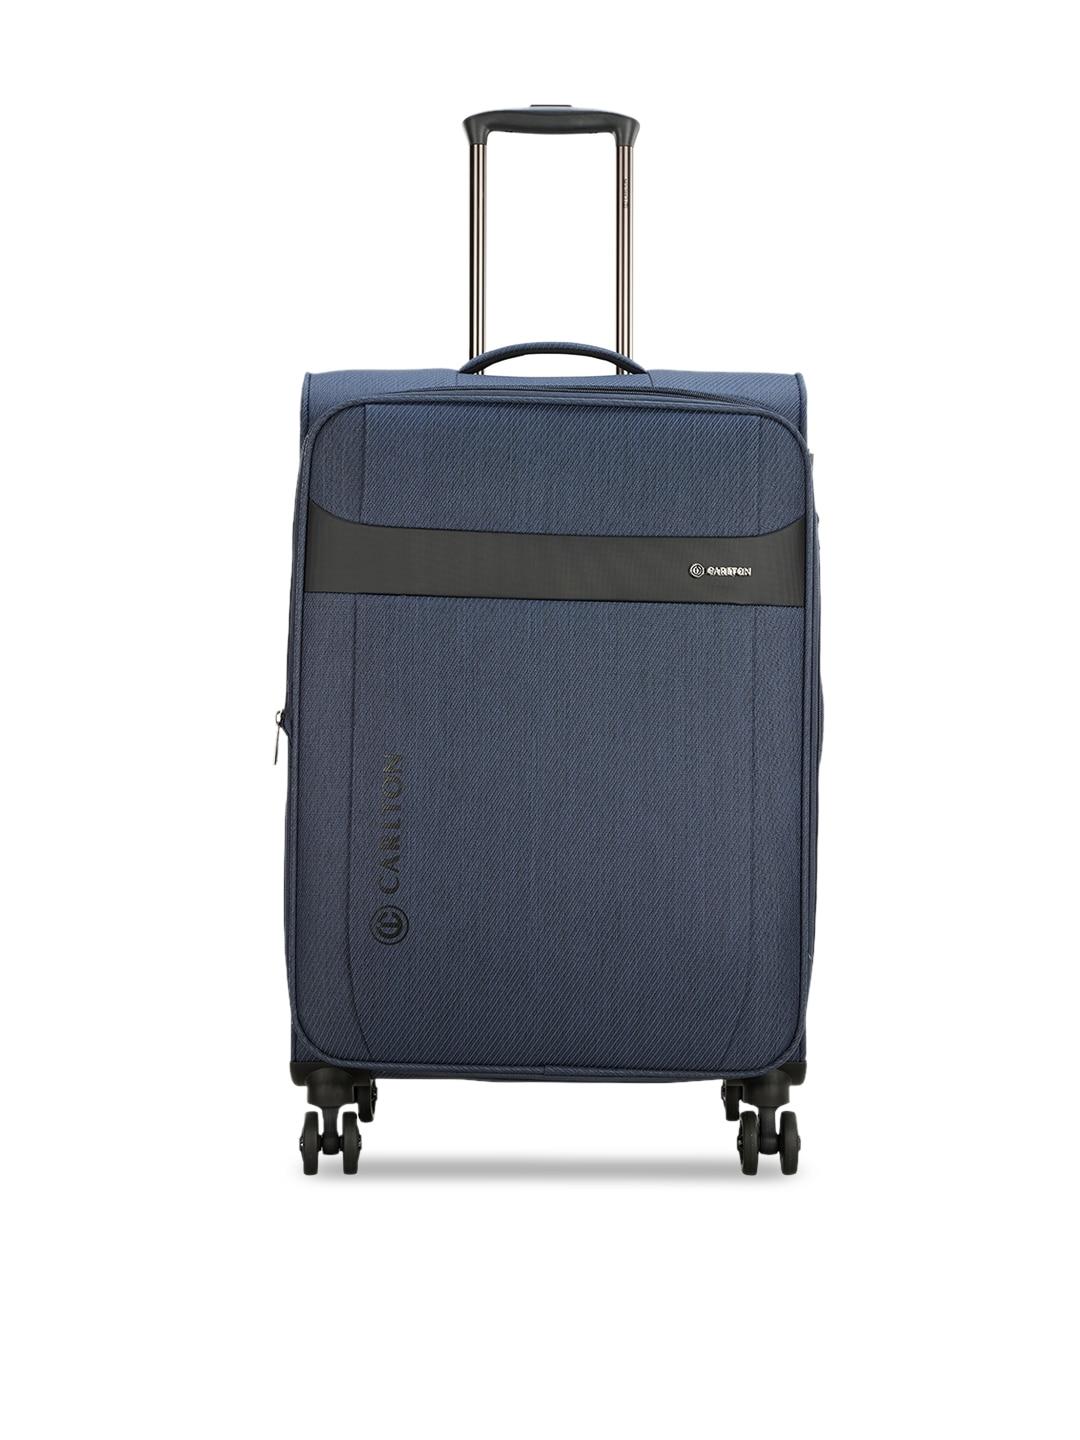 carlton-ashbourne-soft-sided-360-degree-rotation-cabin-trolley-suitcase